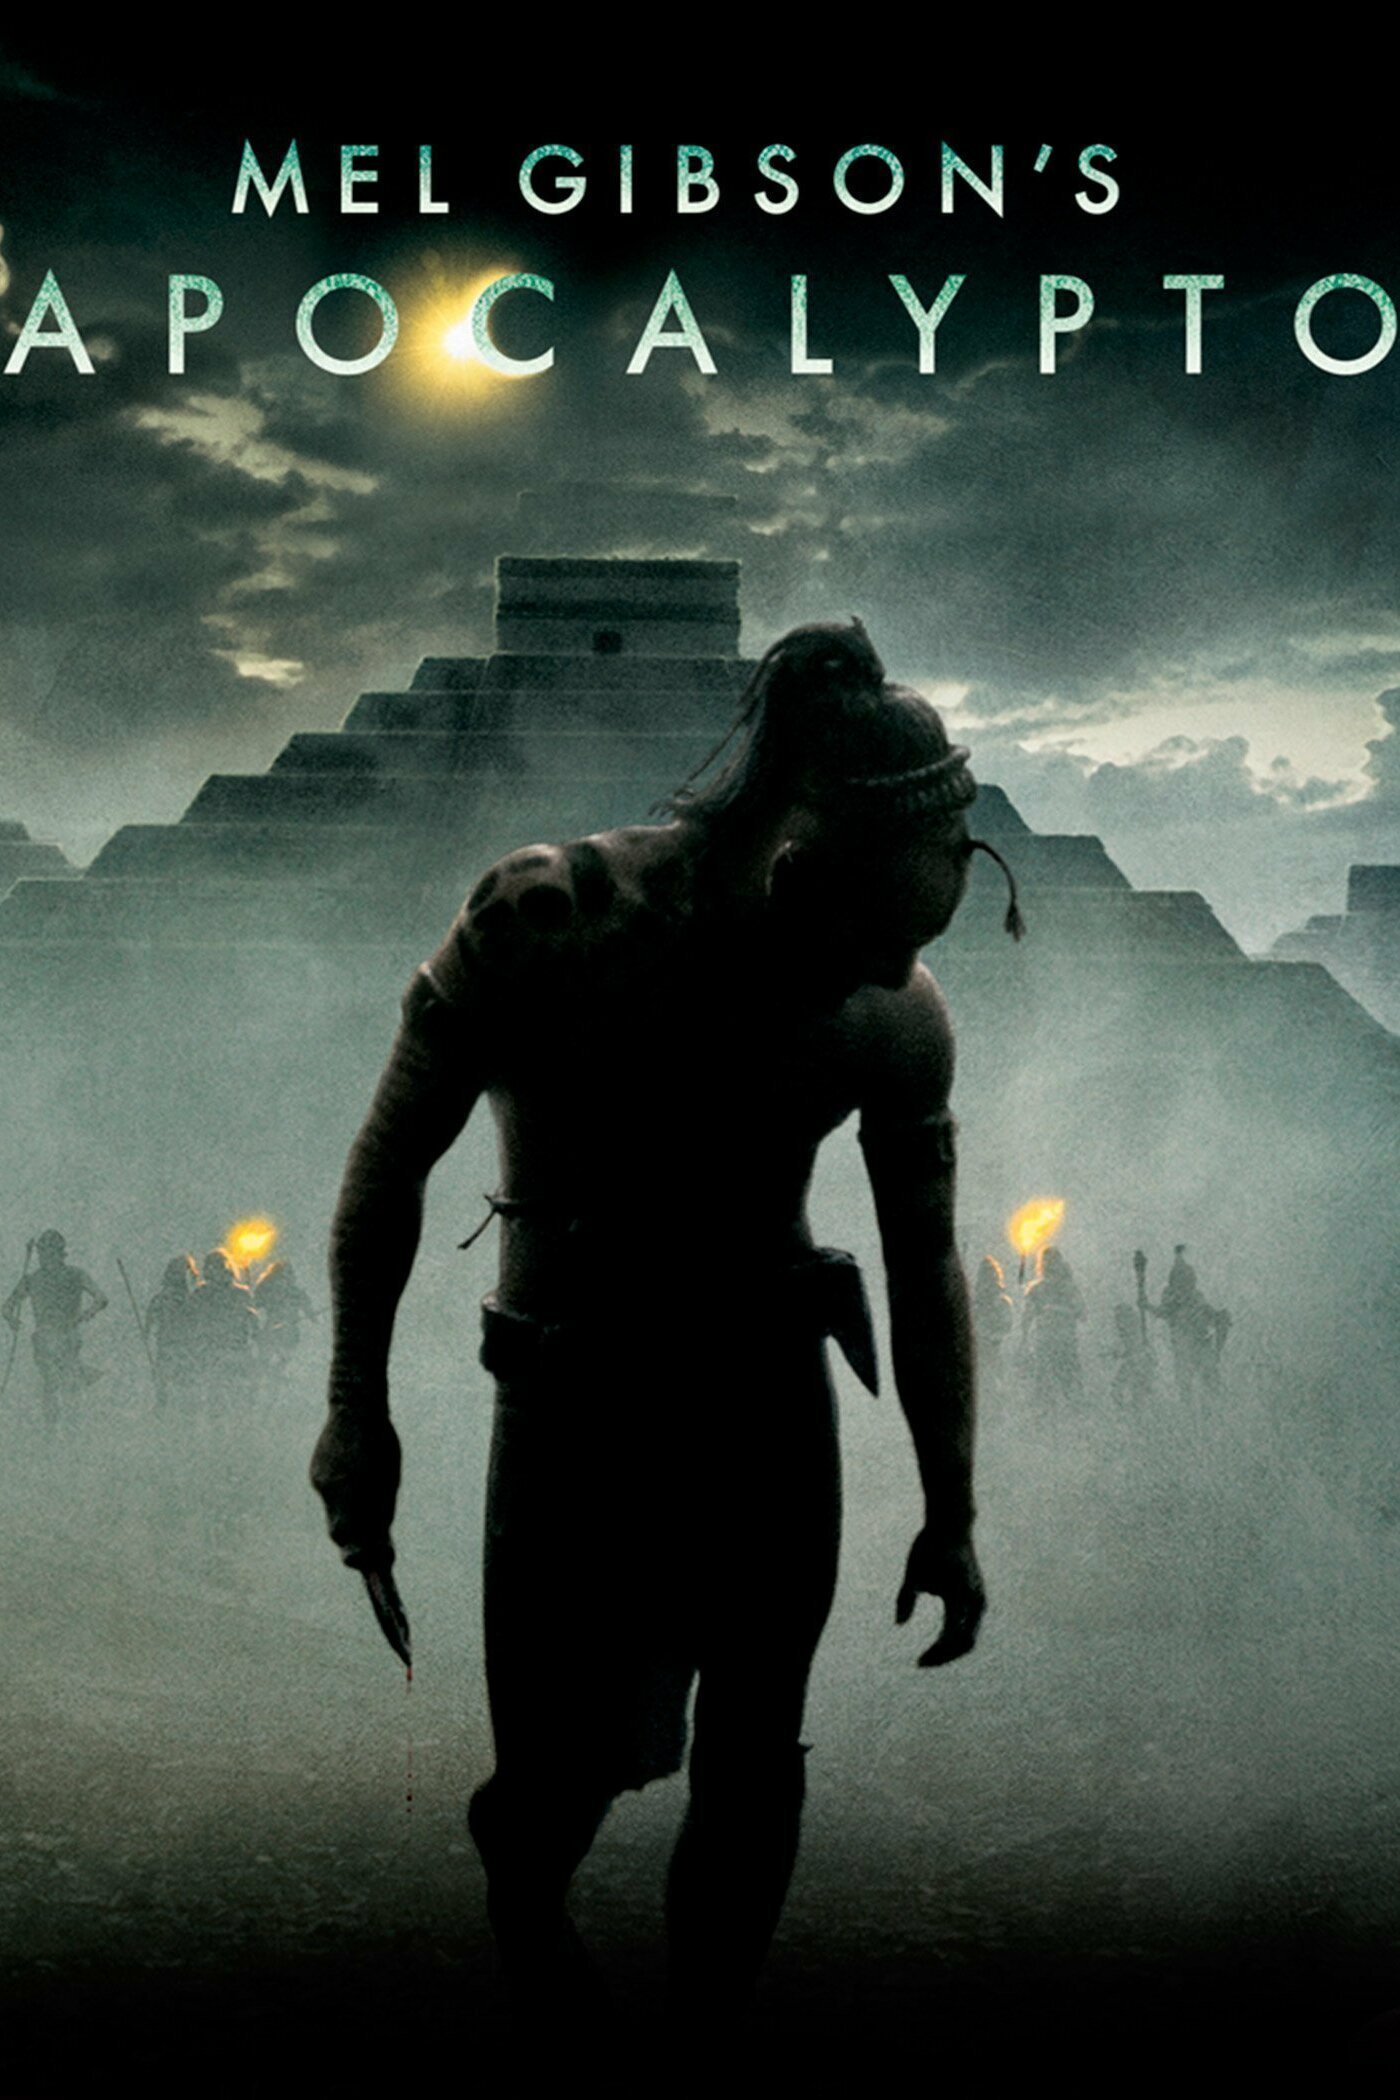 Best of Apocalypto download full movie